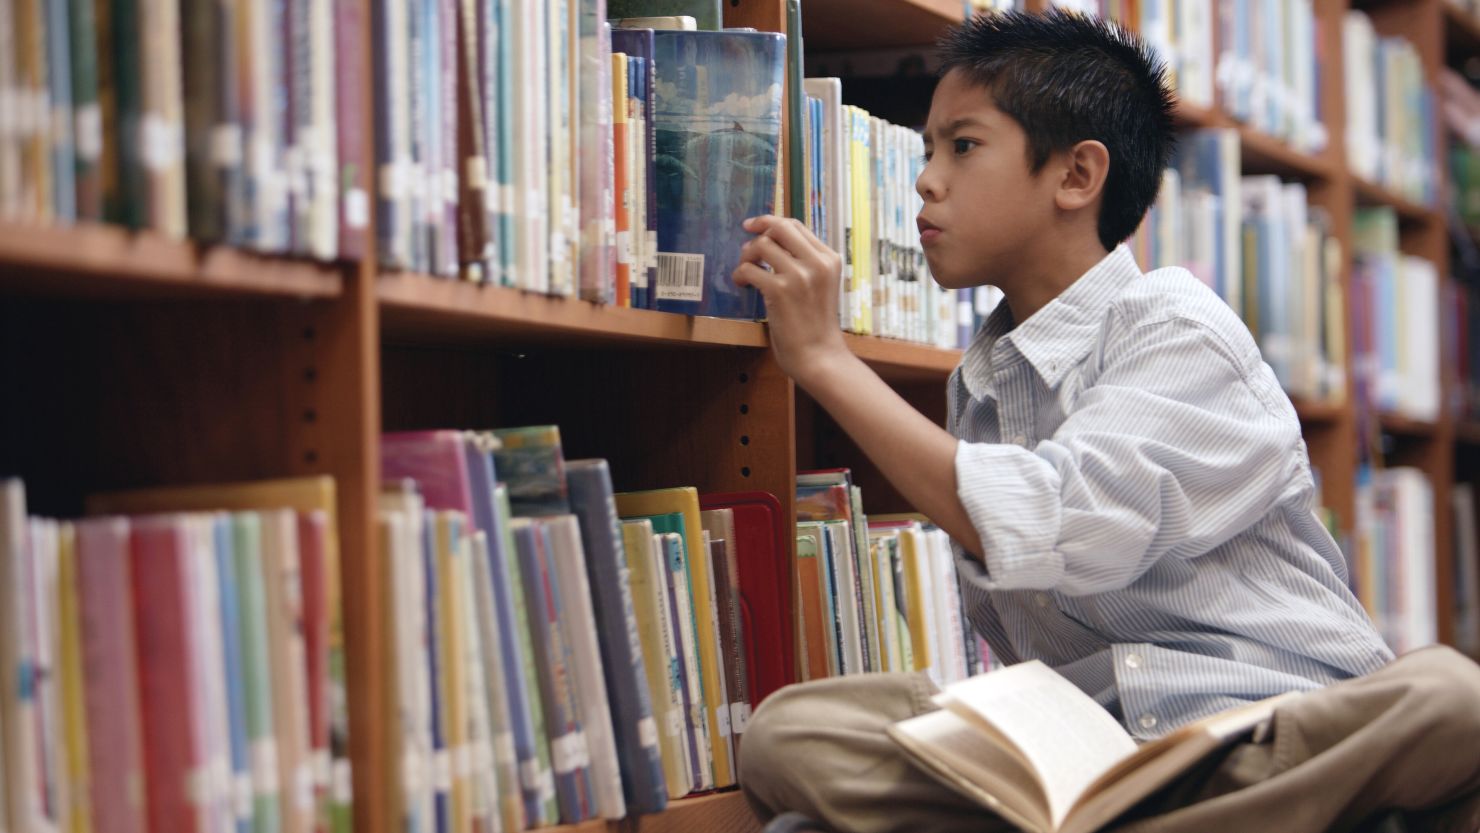 Читать бай. Читает книгу. Children who read books. Read books in Library. Чтение книги будущее.